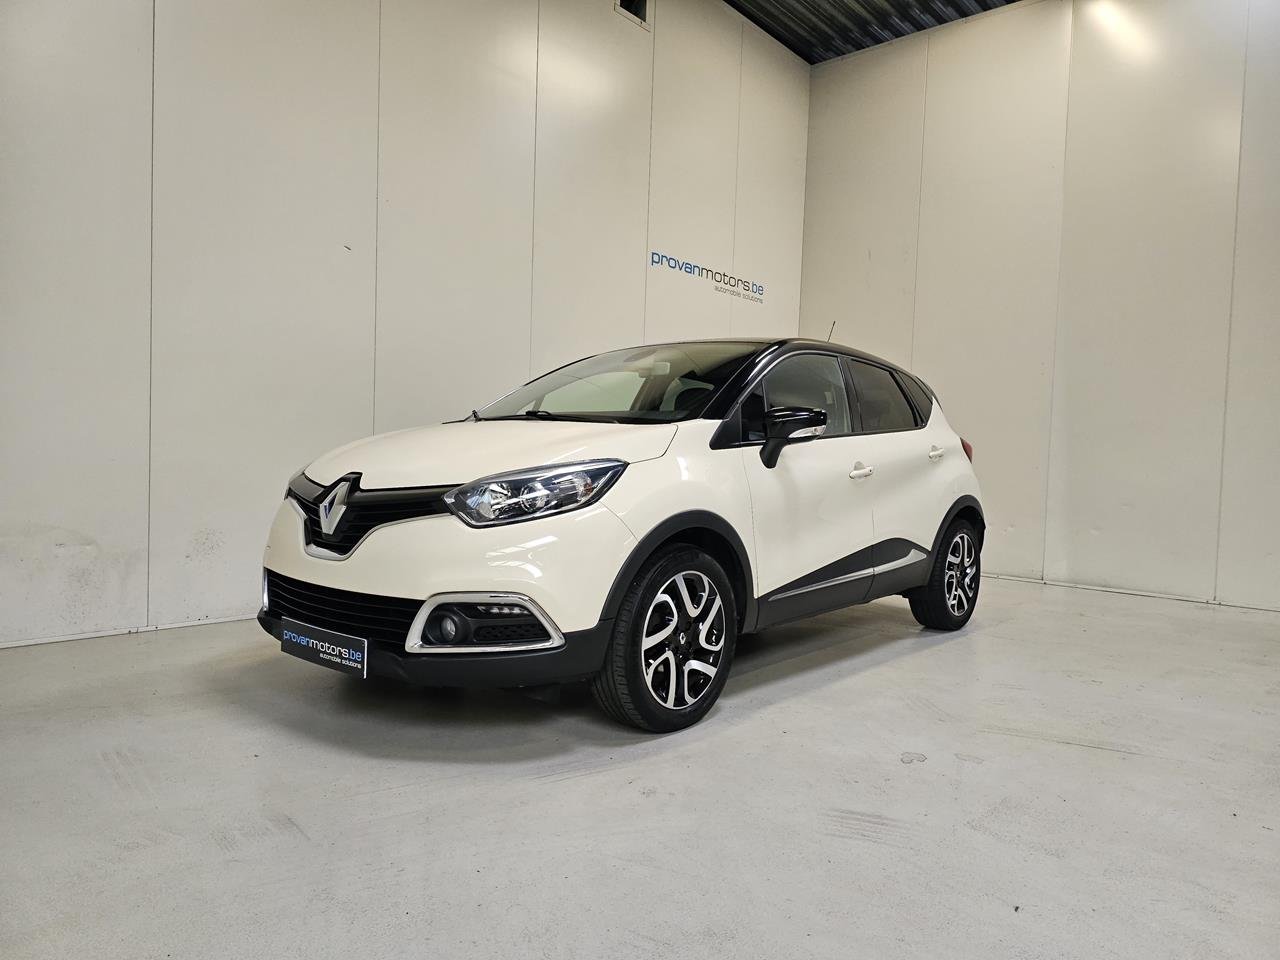 Renault Captur second hand to Eke of 9.990 € | Gocar.be